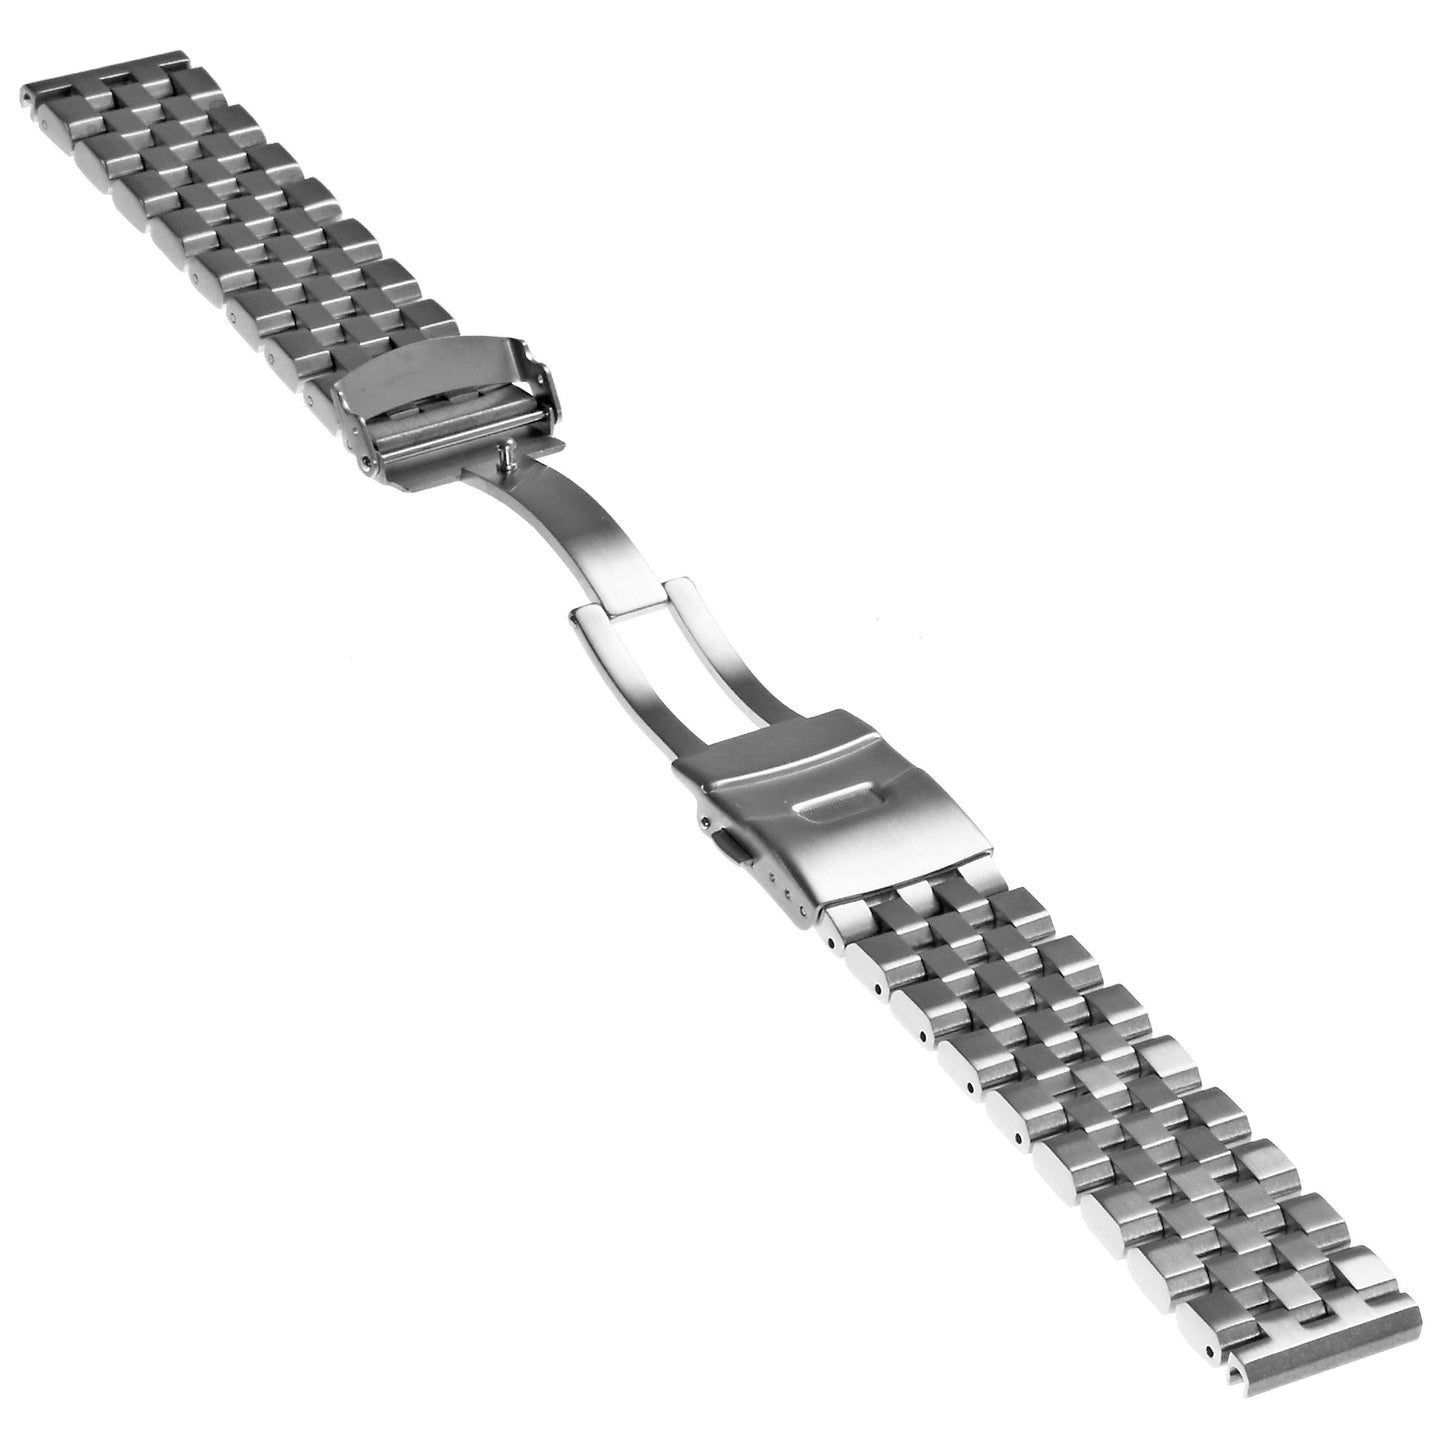 Super Engineer II Bracelet for OnePlus Watch